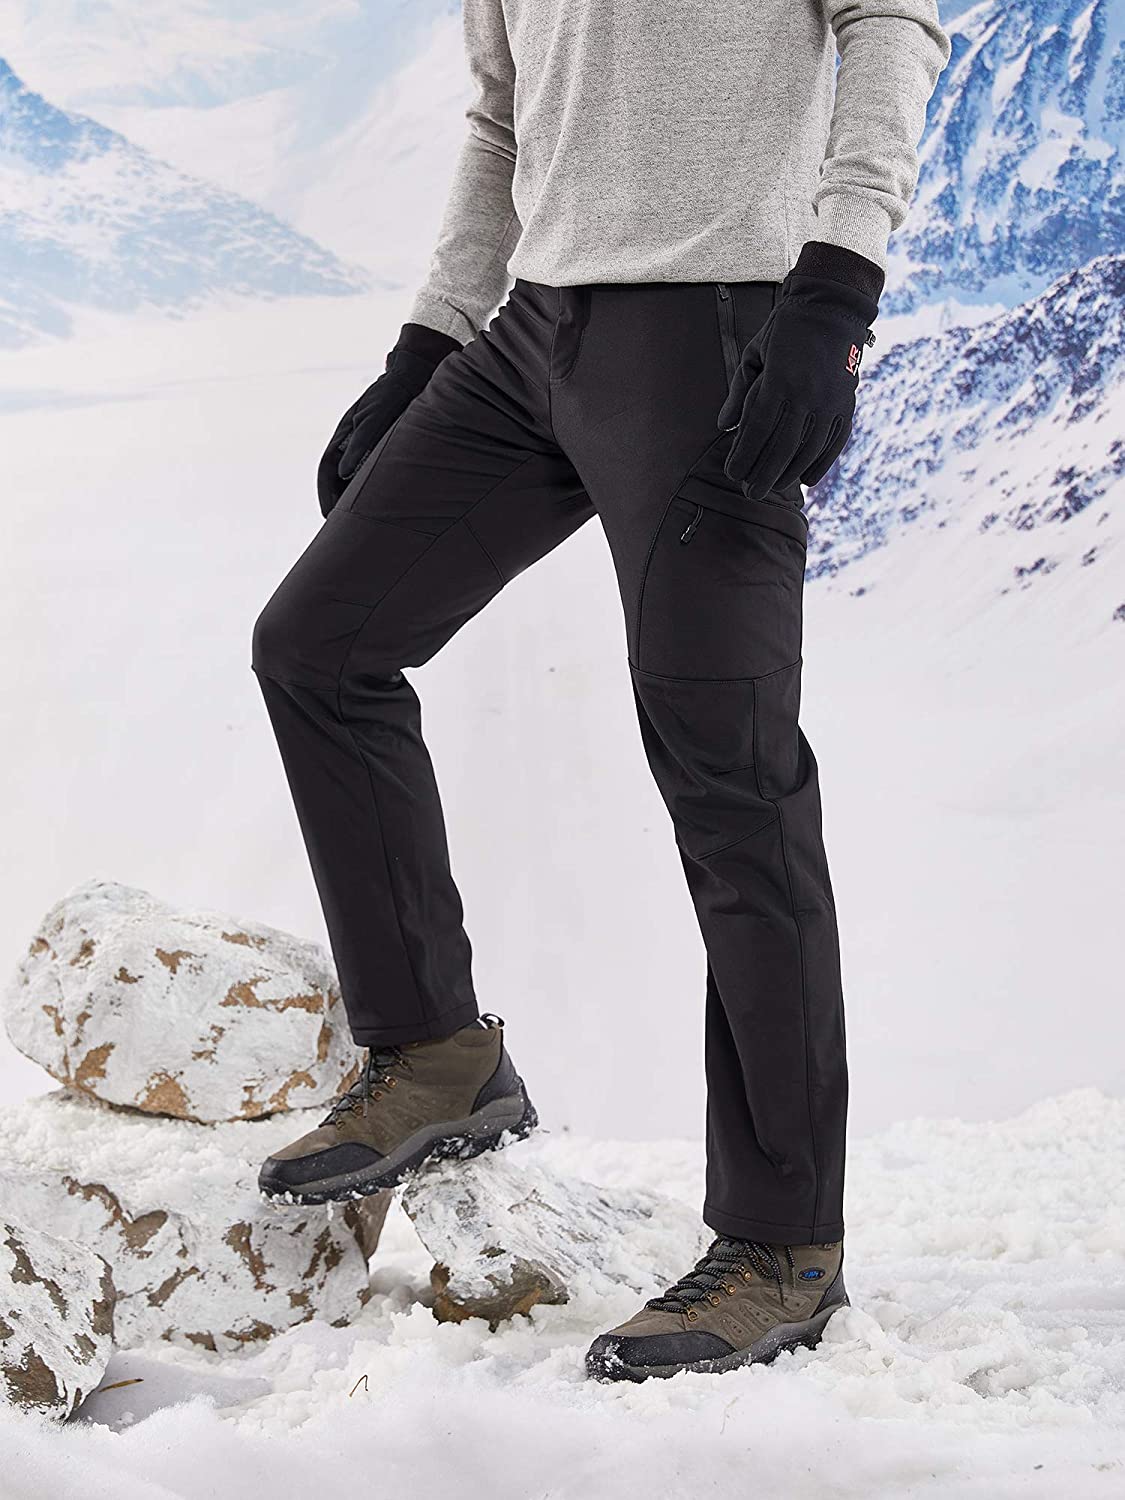 KORAMAN Mens Winter Snow Ski Pants Water-Repellent, Black, Size 29W x ...